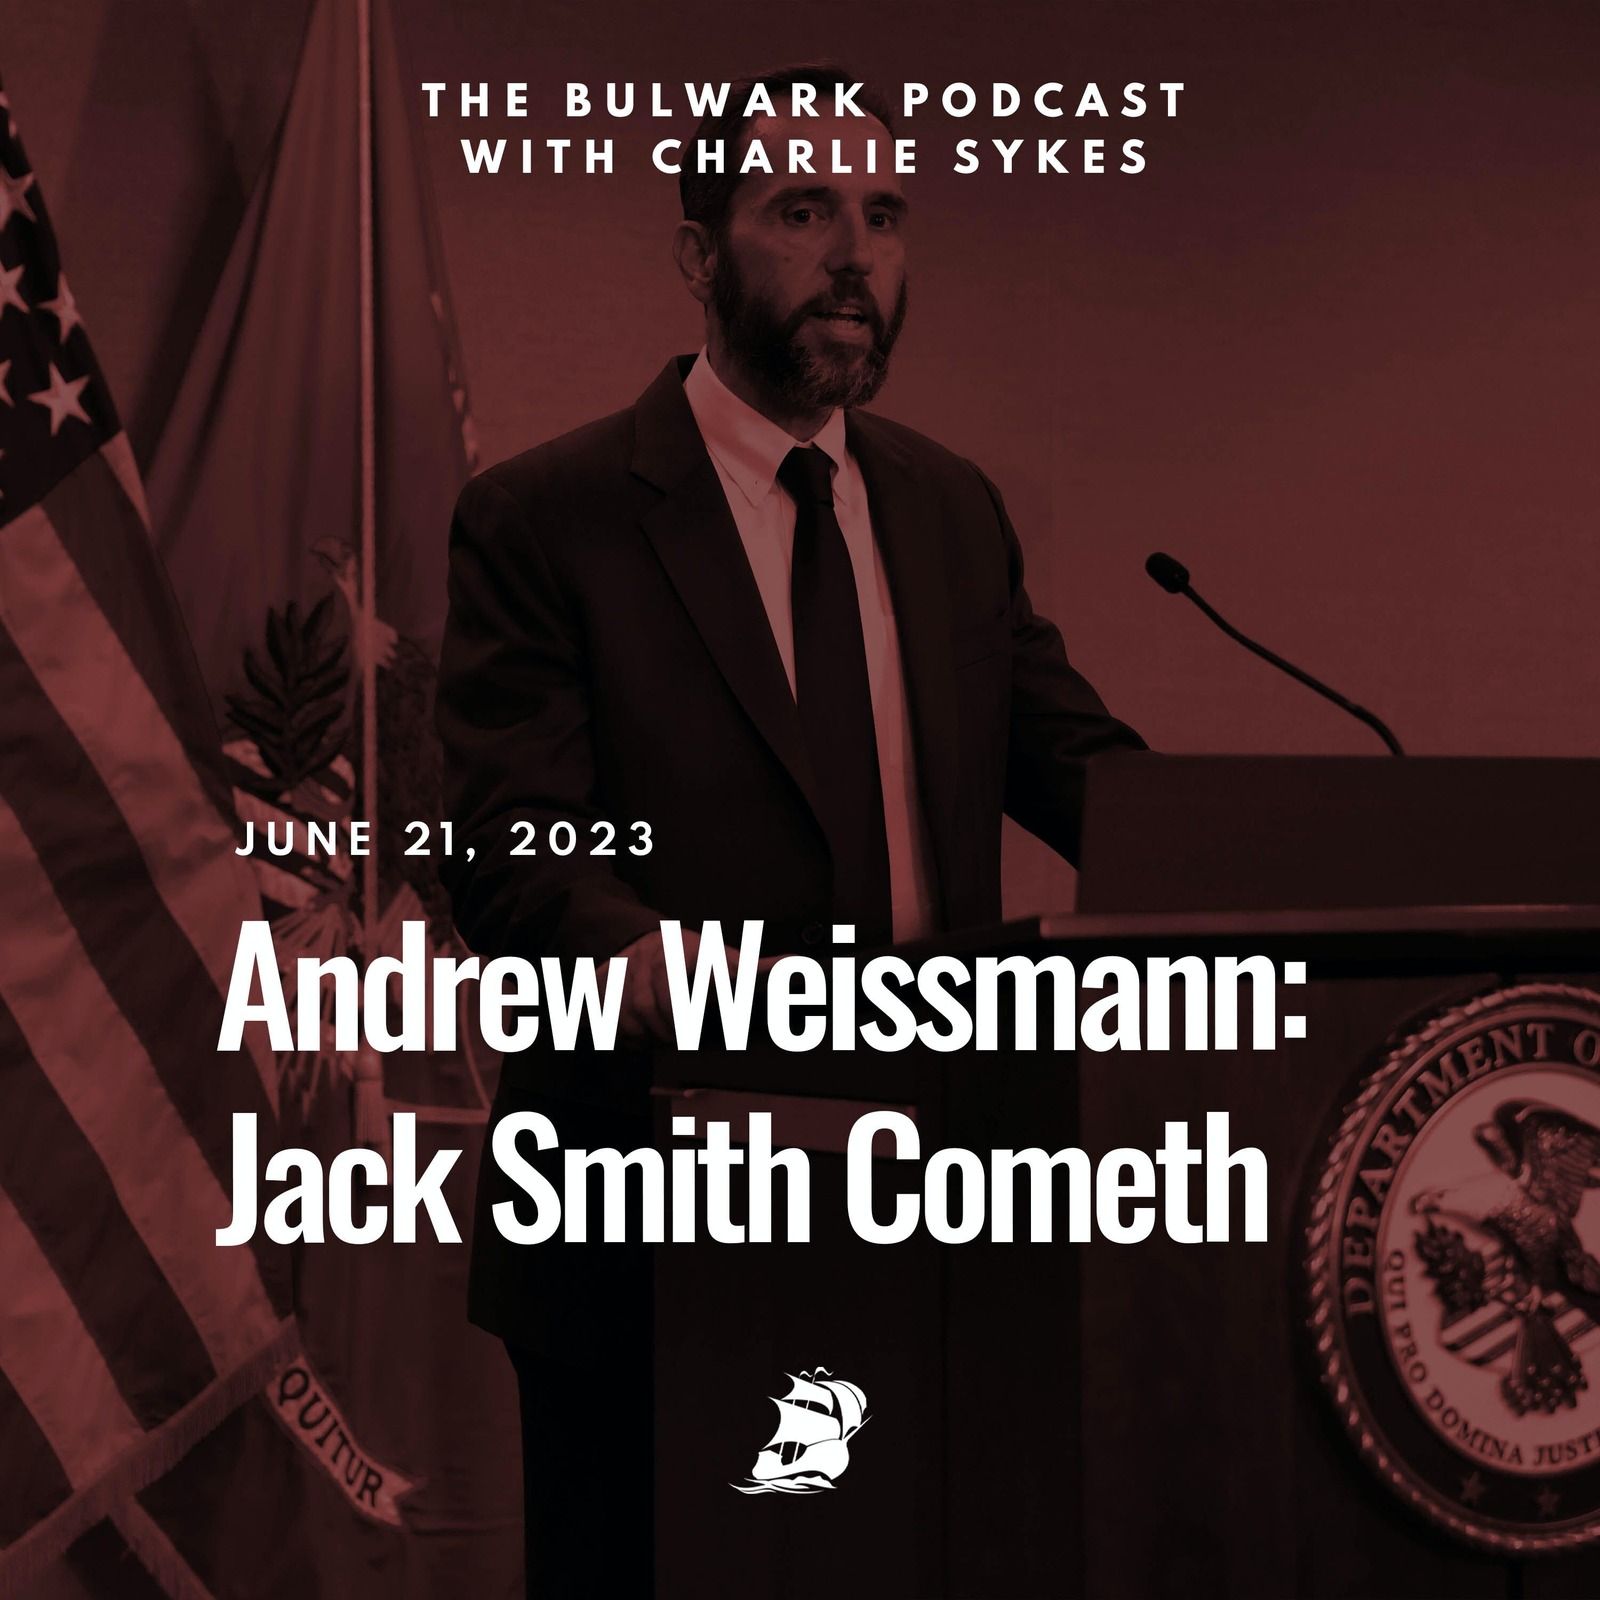 Andrew Weissmann: Jack Smith Cometh by The Bulwark Podcast